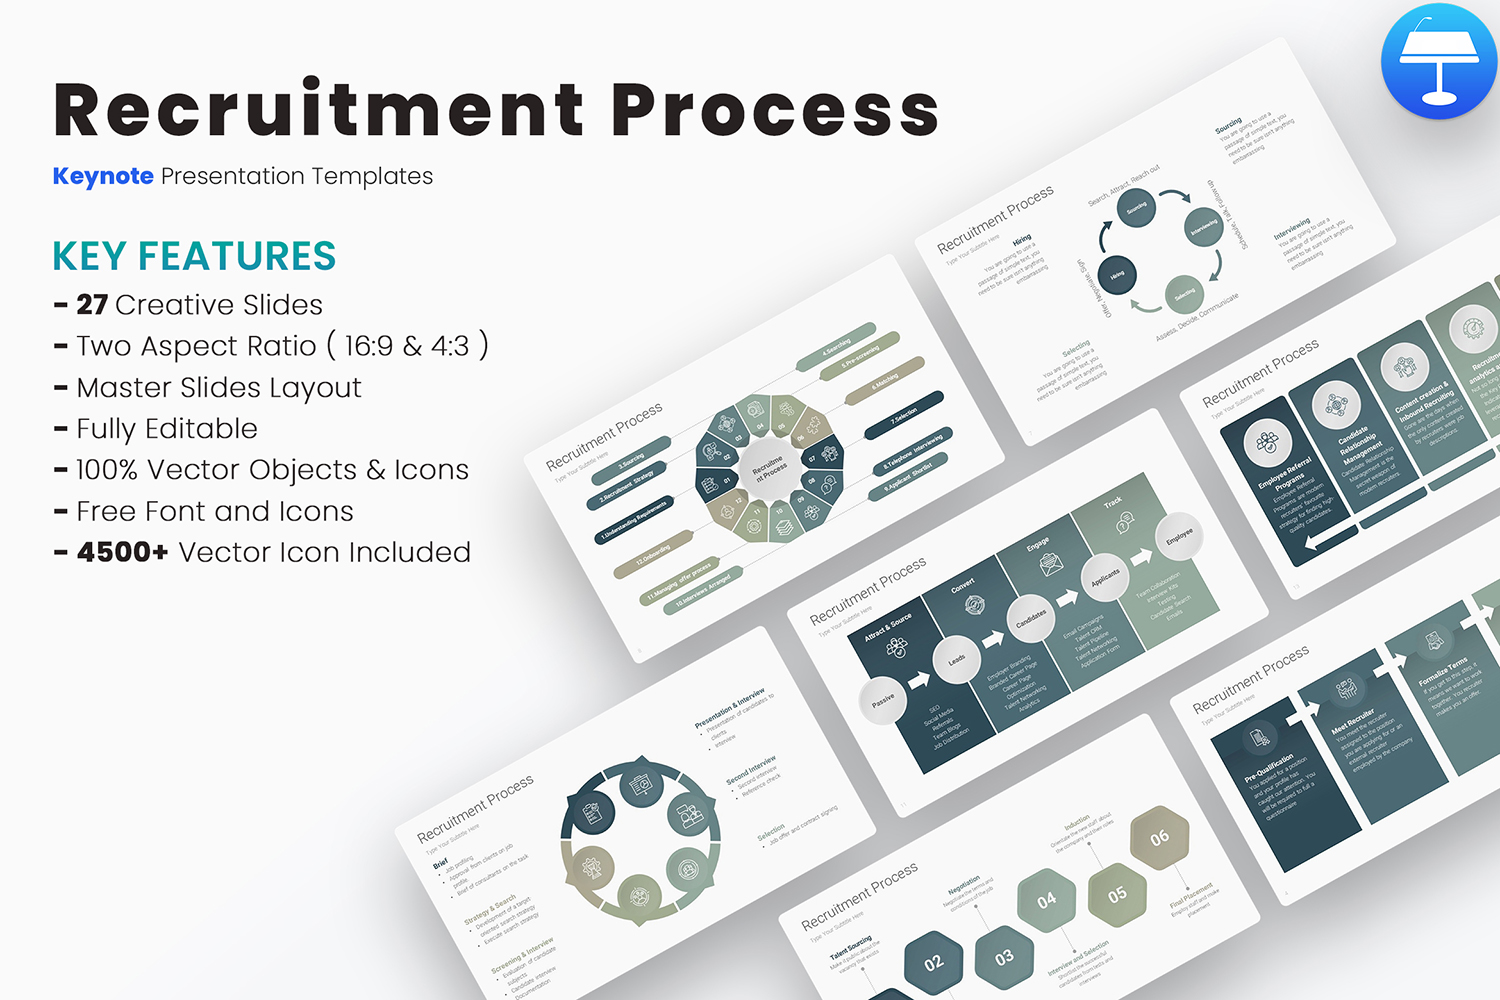 Recruitment Process Keynote Templates